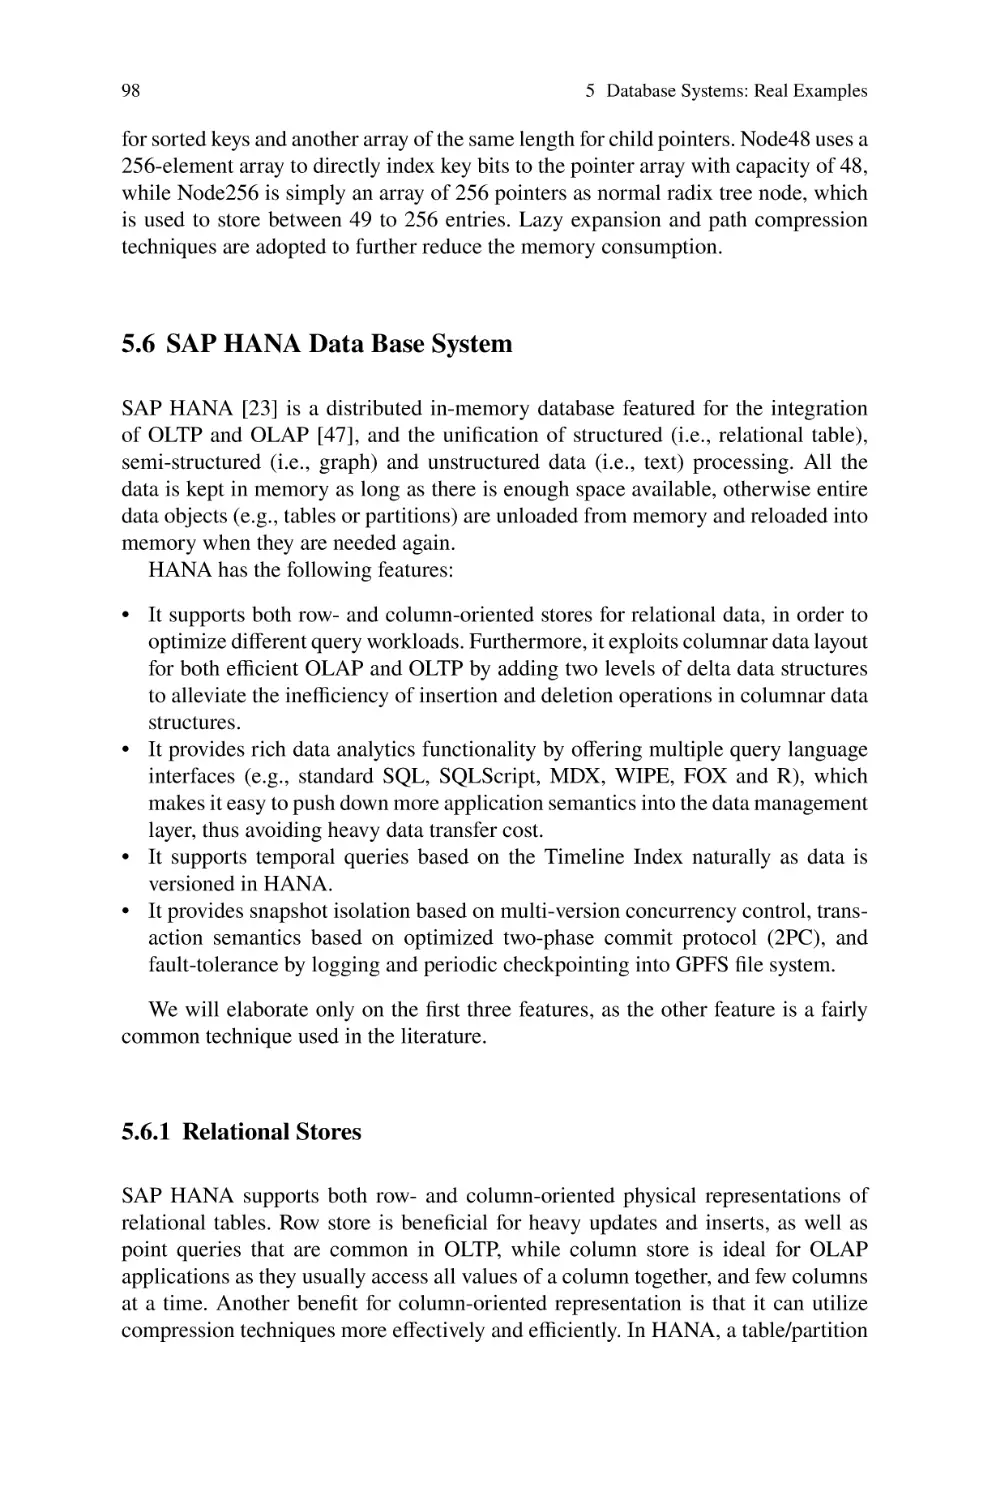 5.6 SAP HANA Data Base System
5.6.1 Relational Stores